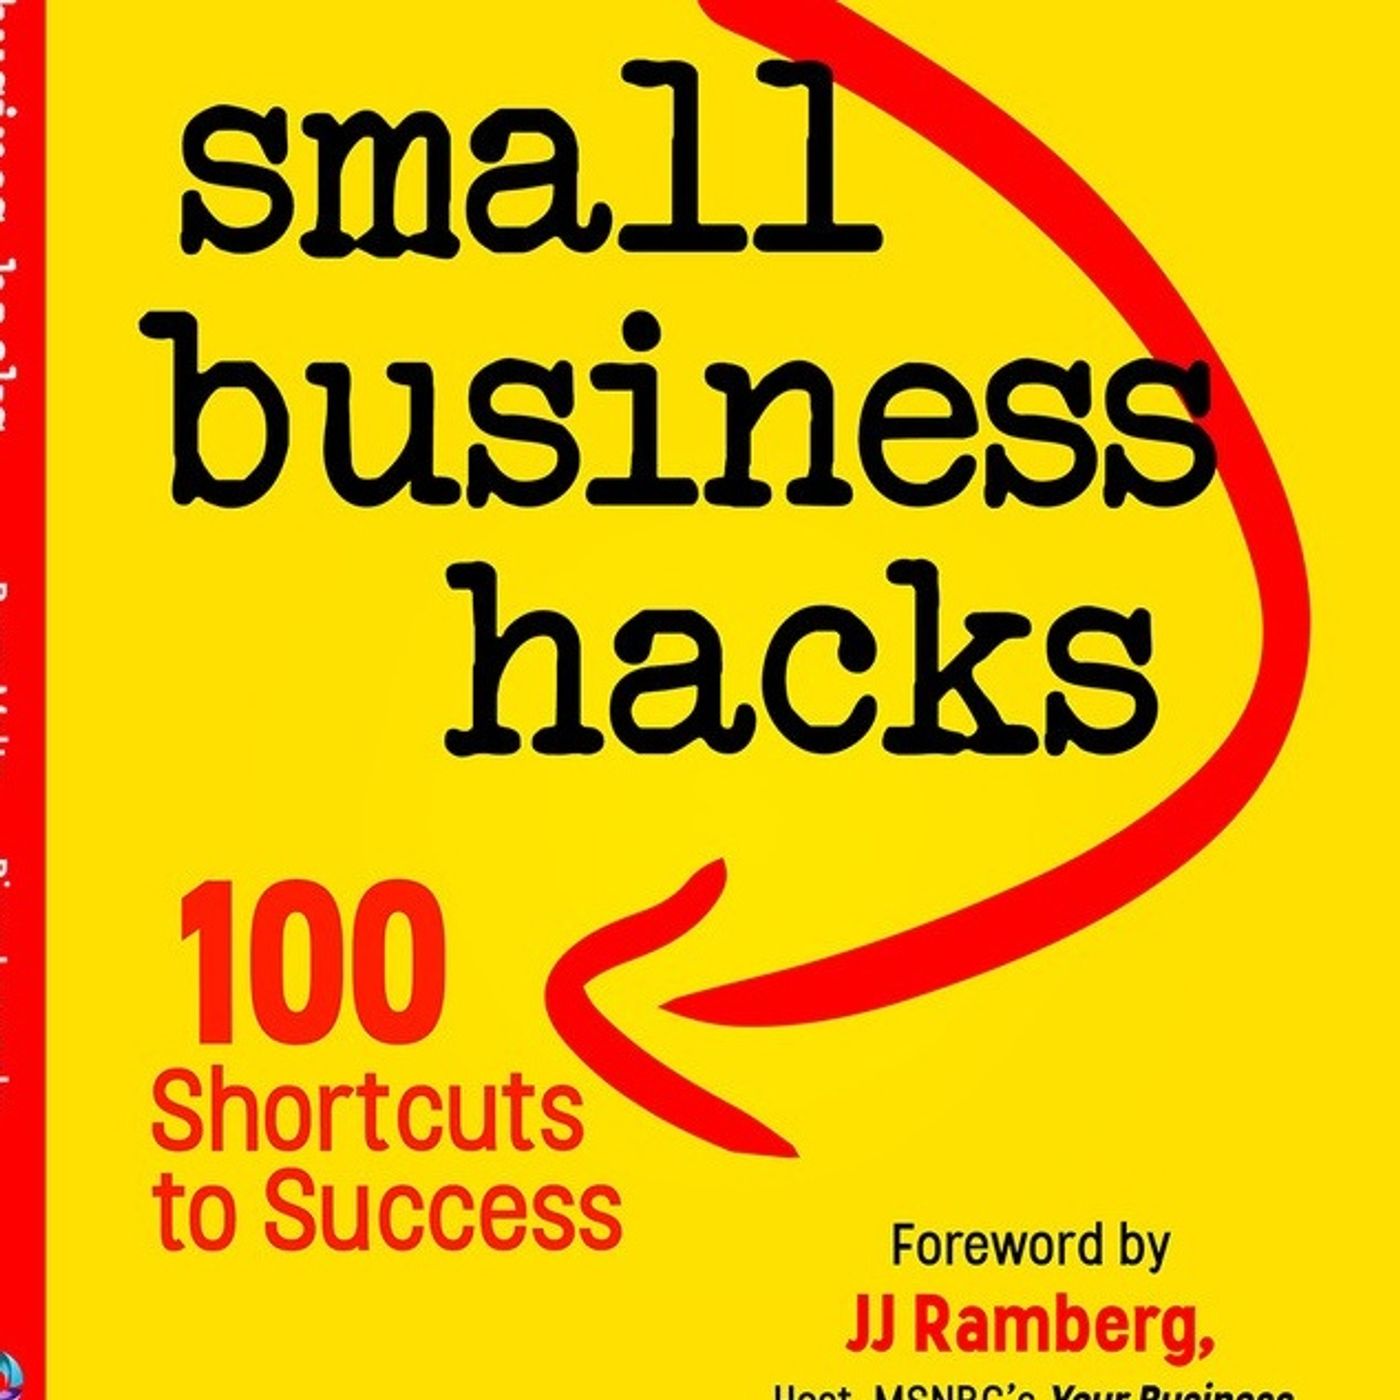 E11 Barry Moltz Small Business Hacks 100 Shortcuts to Success